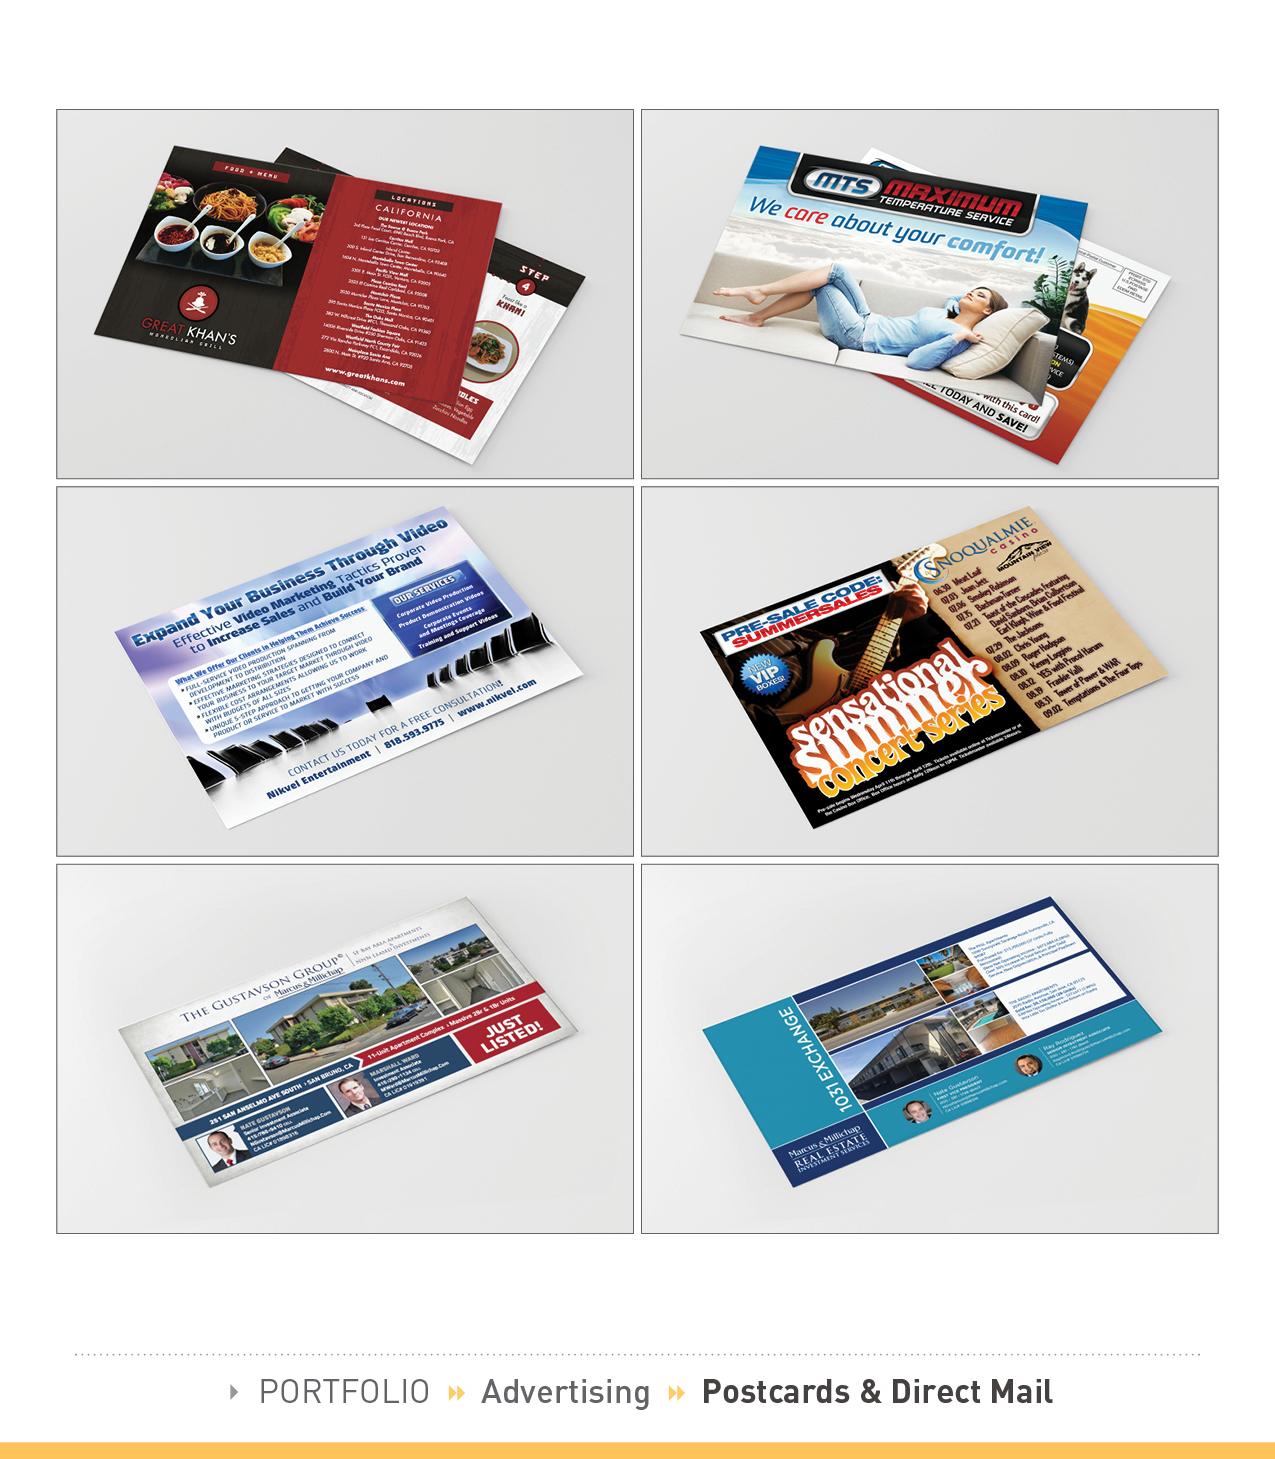 » PORTFOLIO » Advertising » Postcards & Direct Mail